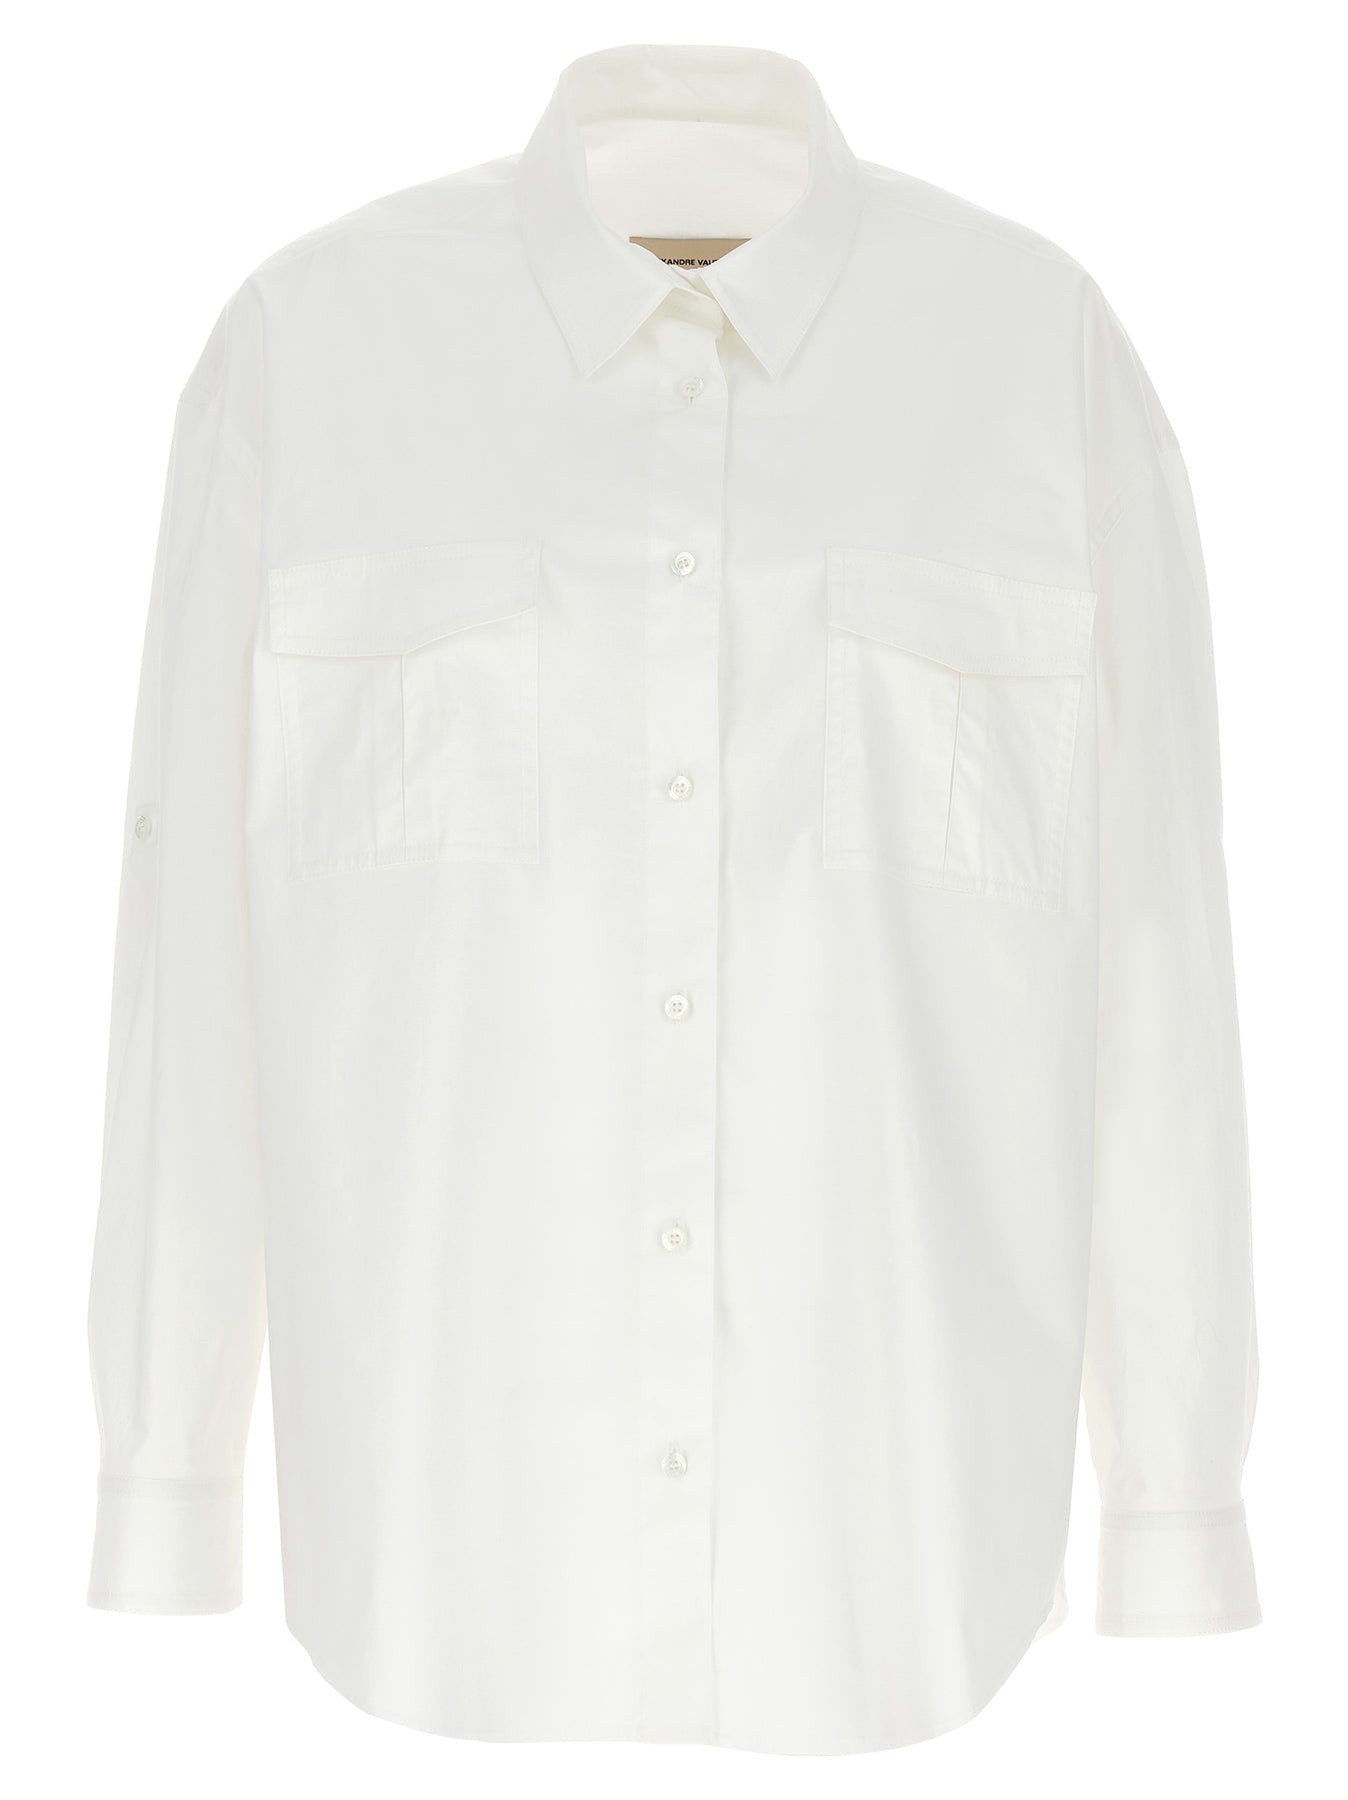 Pocket Shirt Shirt, Blouse White - 1